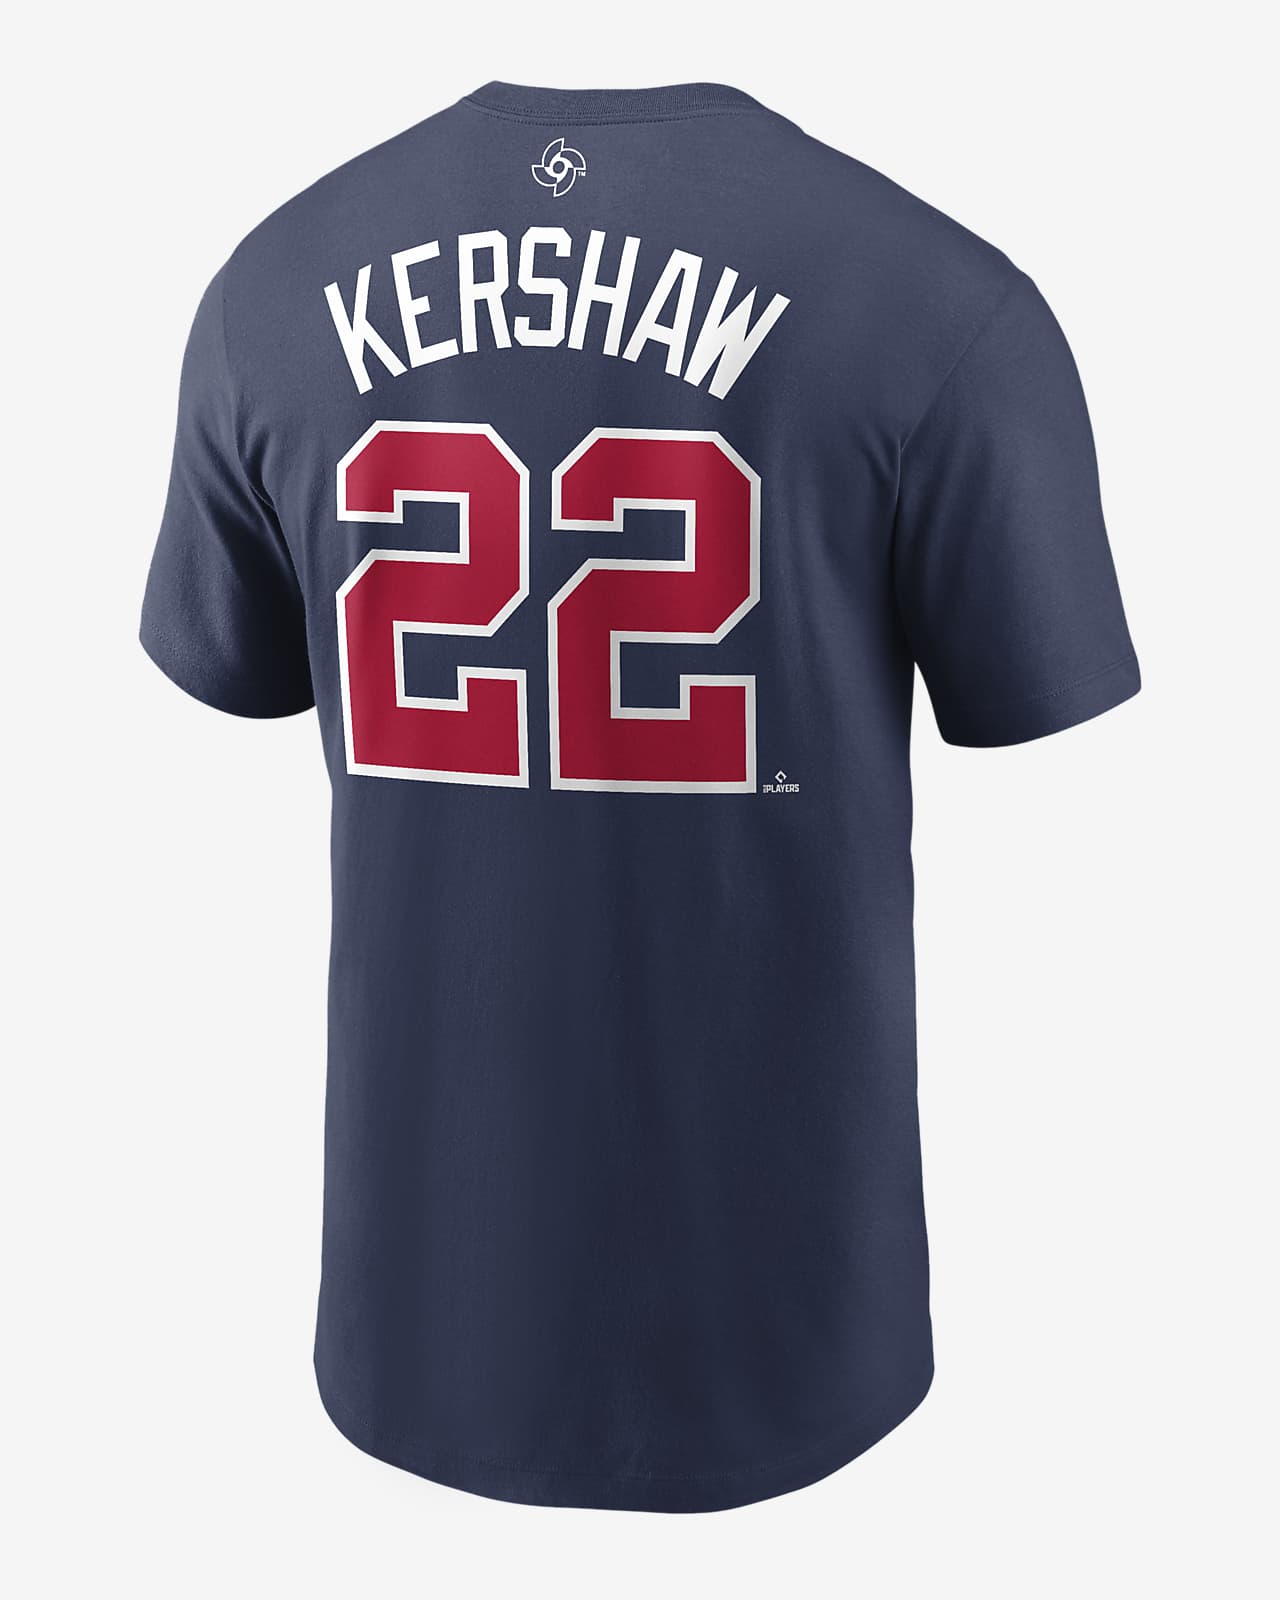 USA Baseball 2023 World Baseball Classic (Clayton Kershaw) Men's T-Shirt.